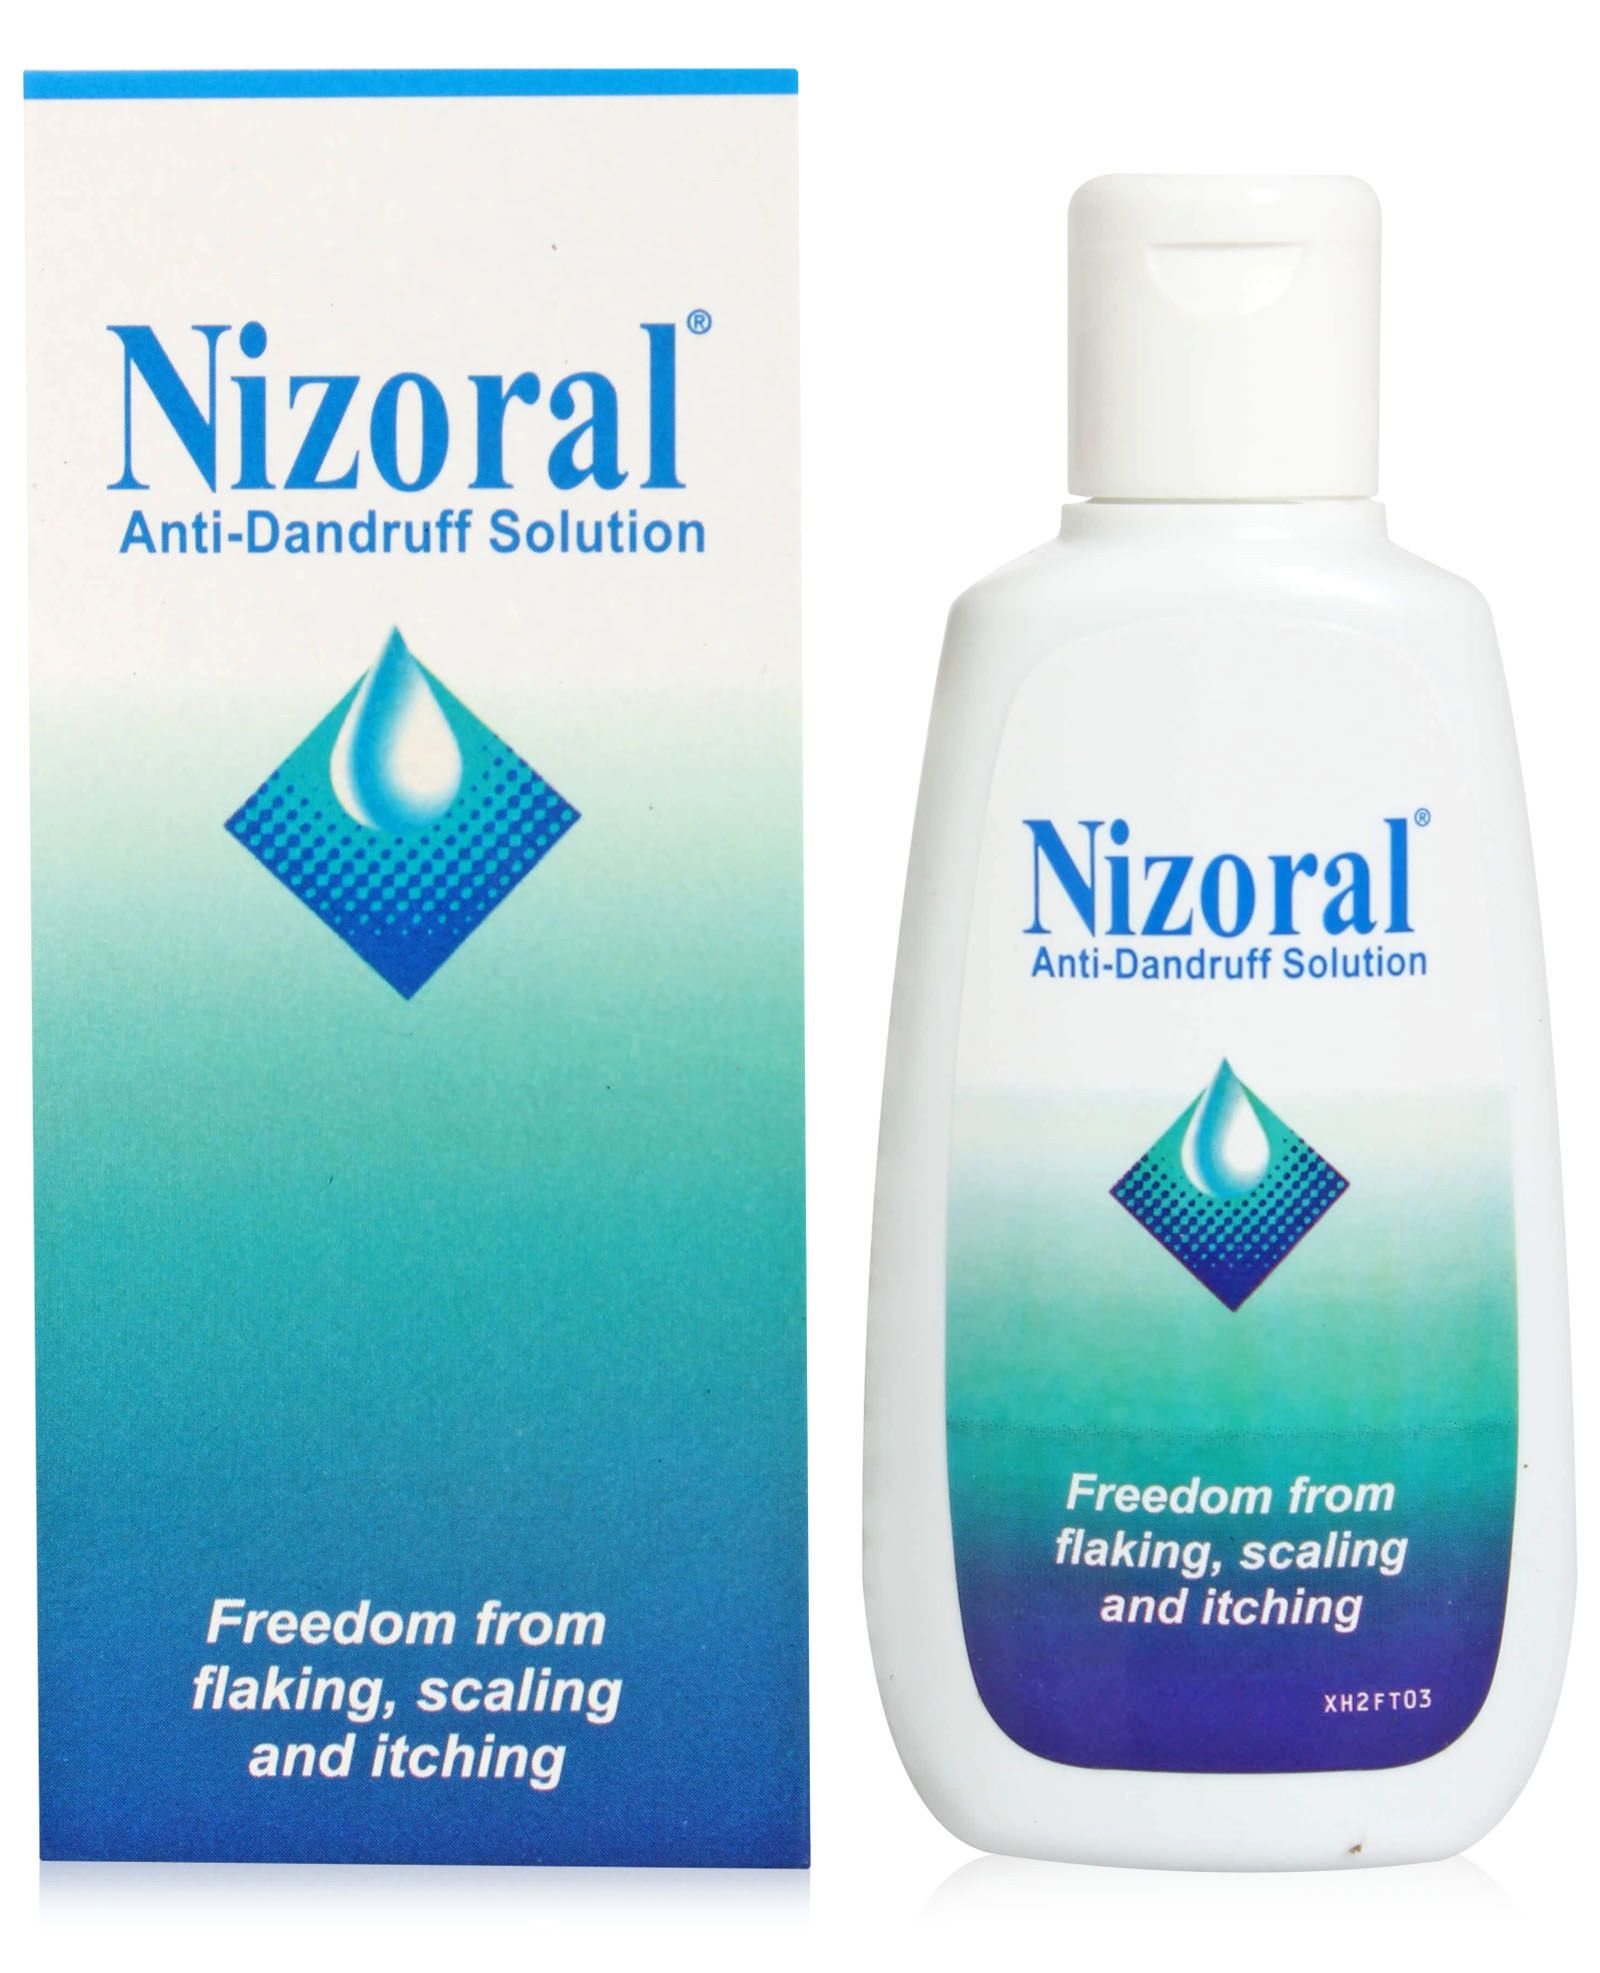 nizoral shampoo used for acne